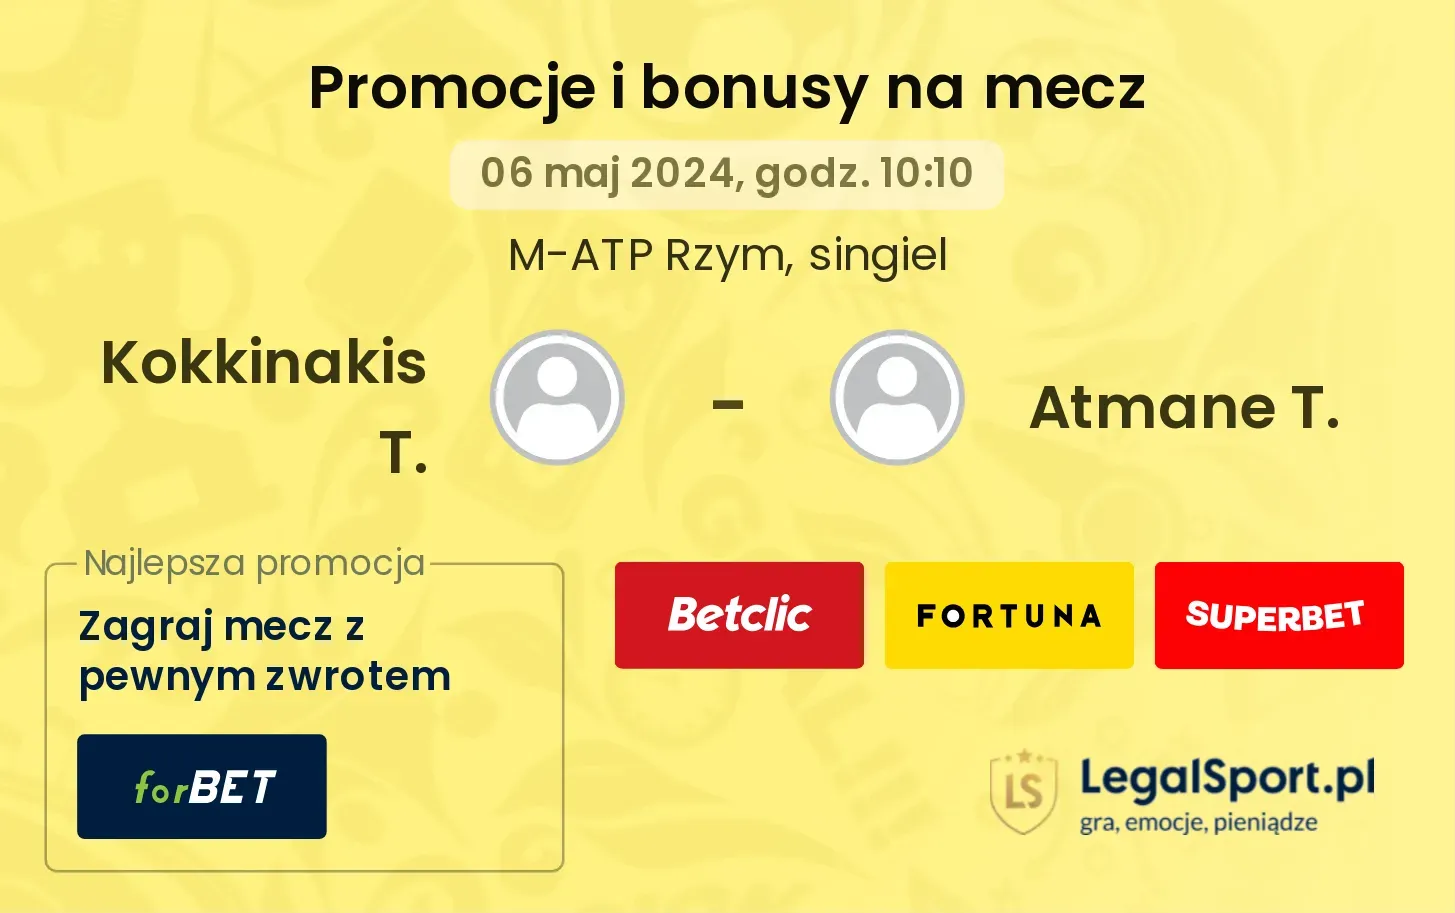 Kokkinakis T. - Atmane T. promocje bonusy na mecz